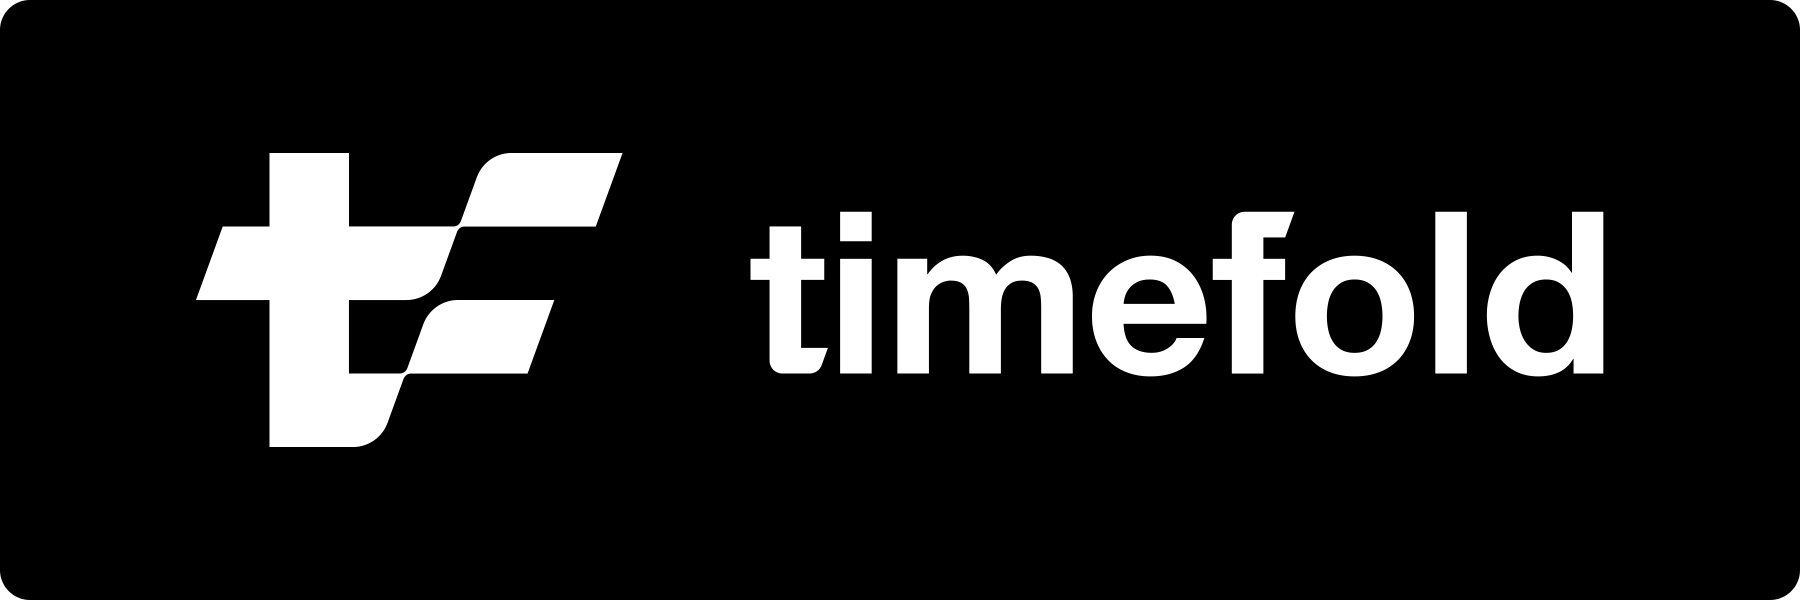 timefold logo